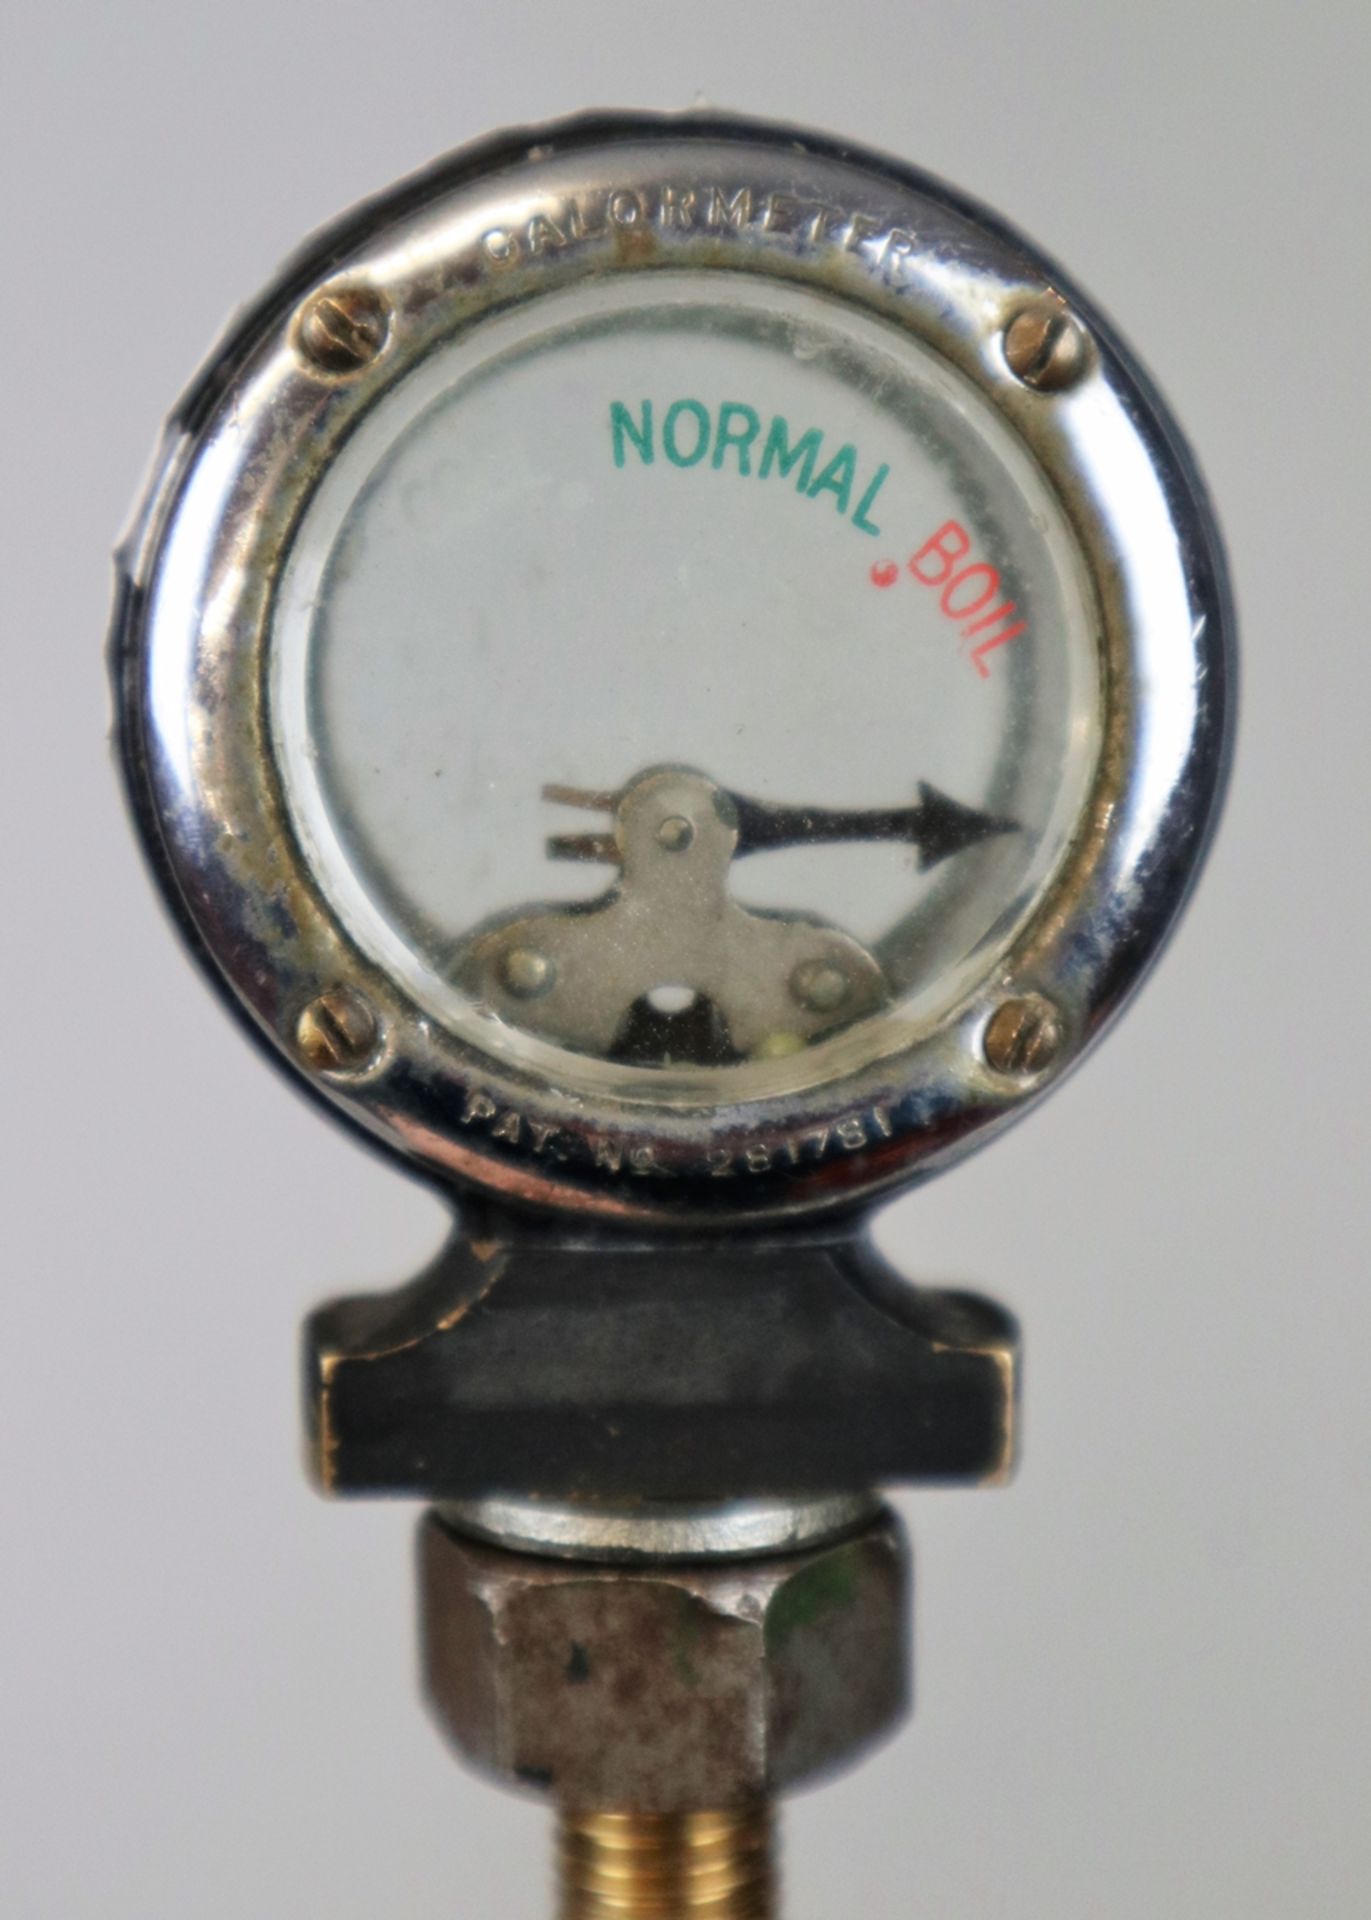 Vintage calormeter